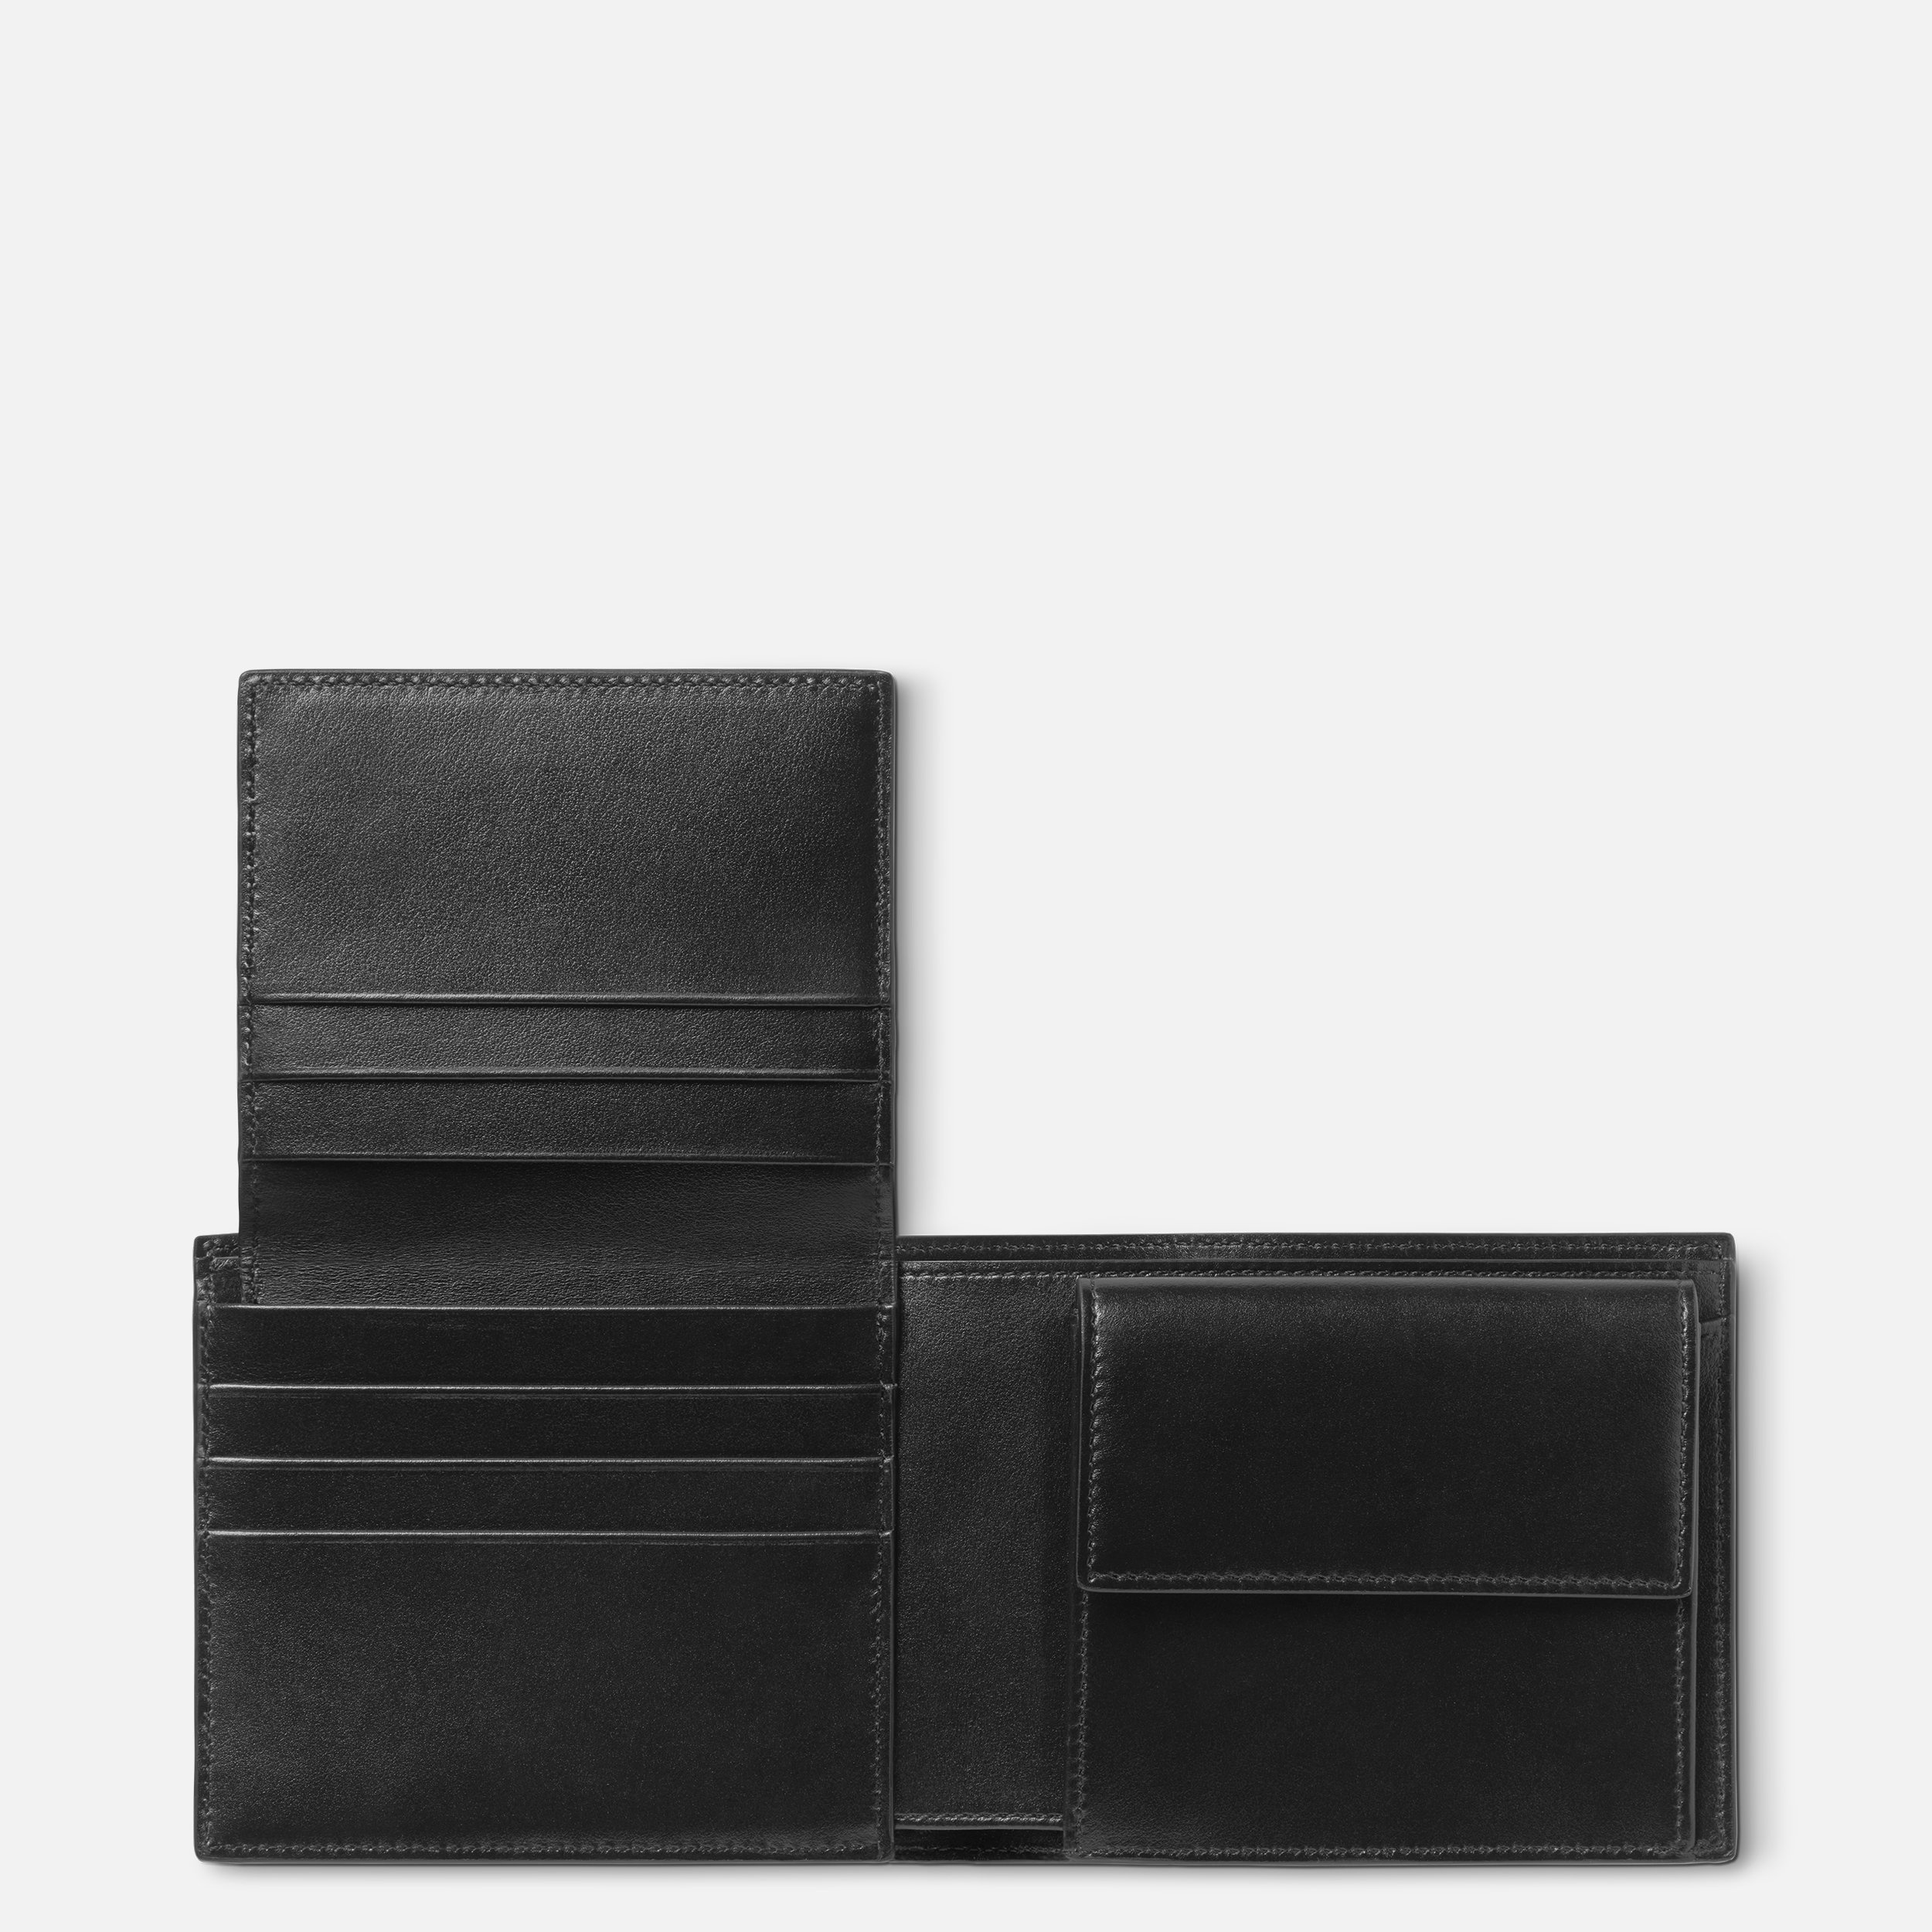 Meisterstück wallet 10cc with coin case - 4